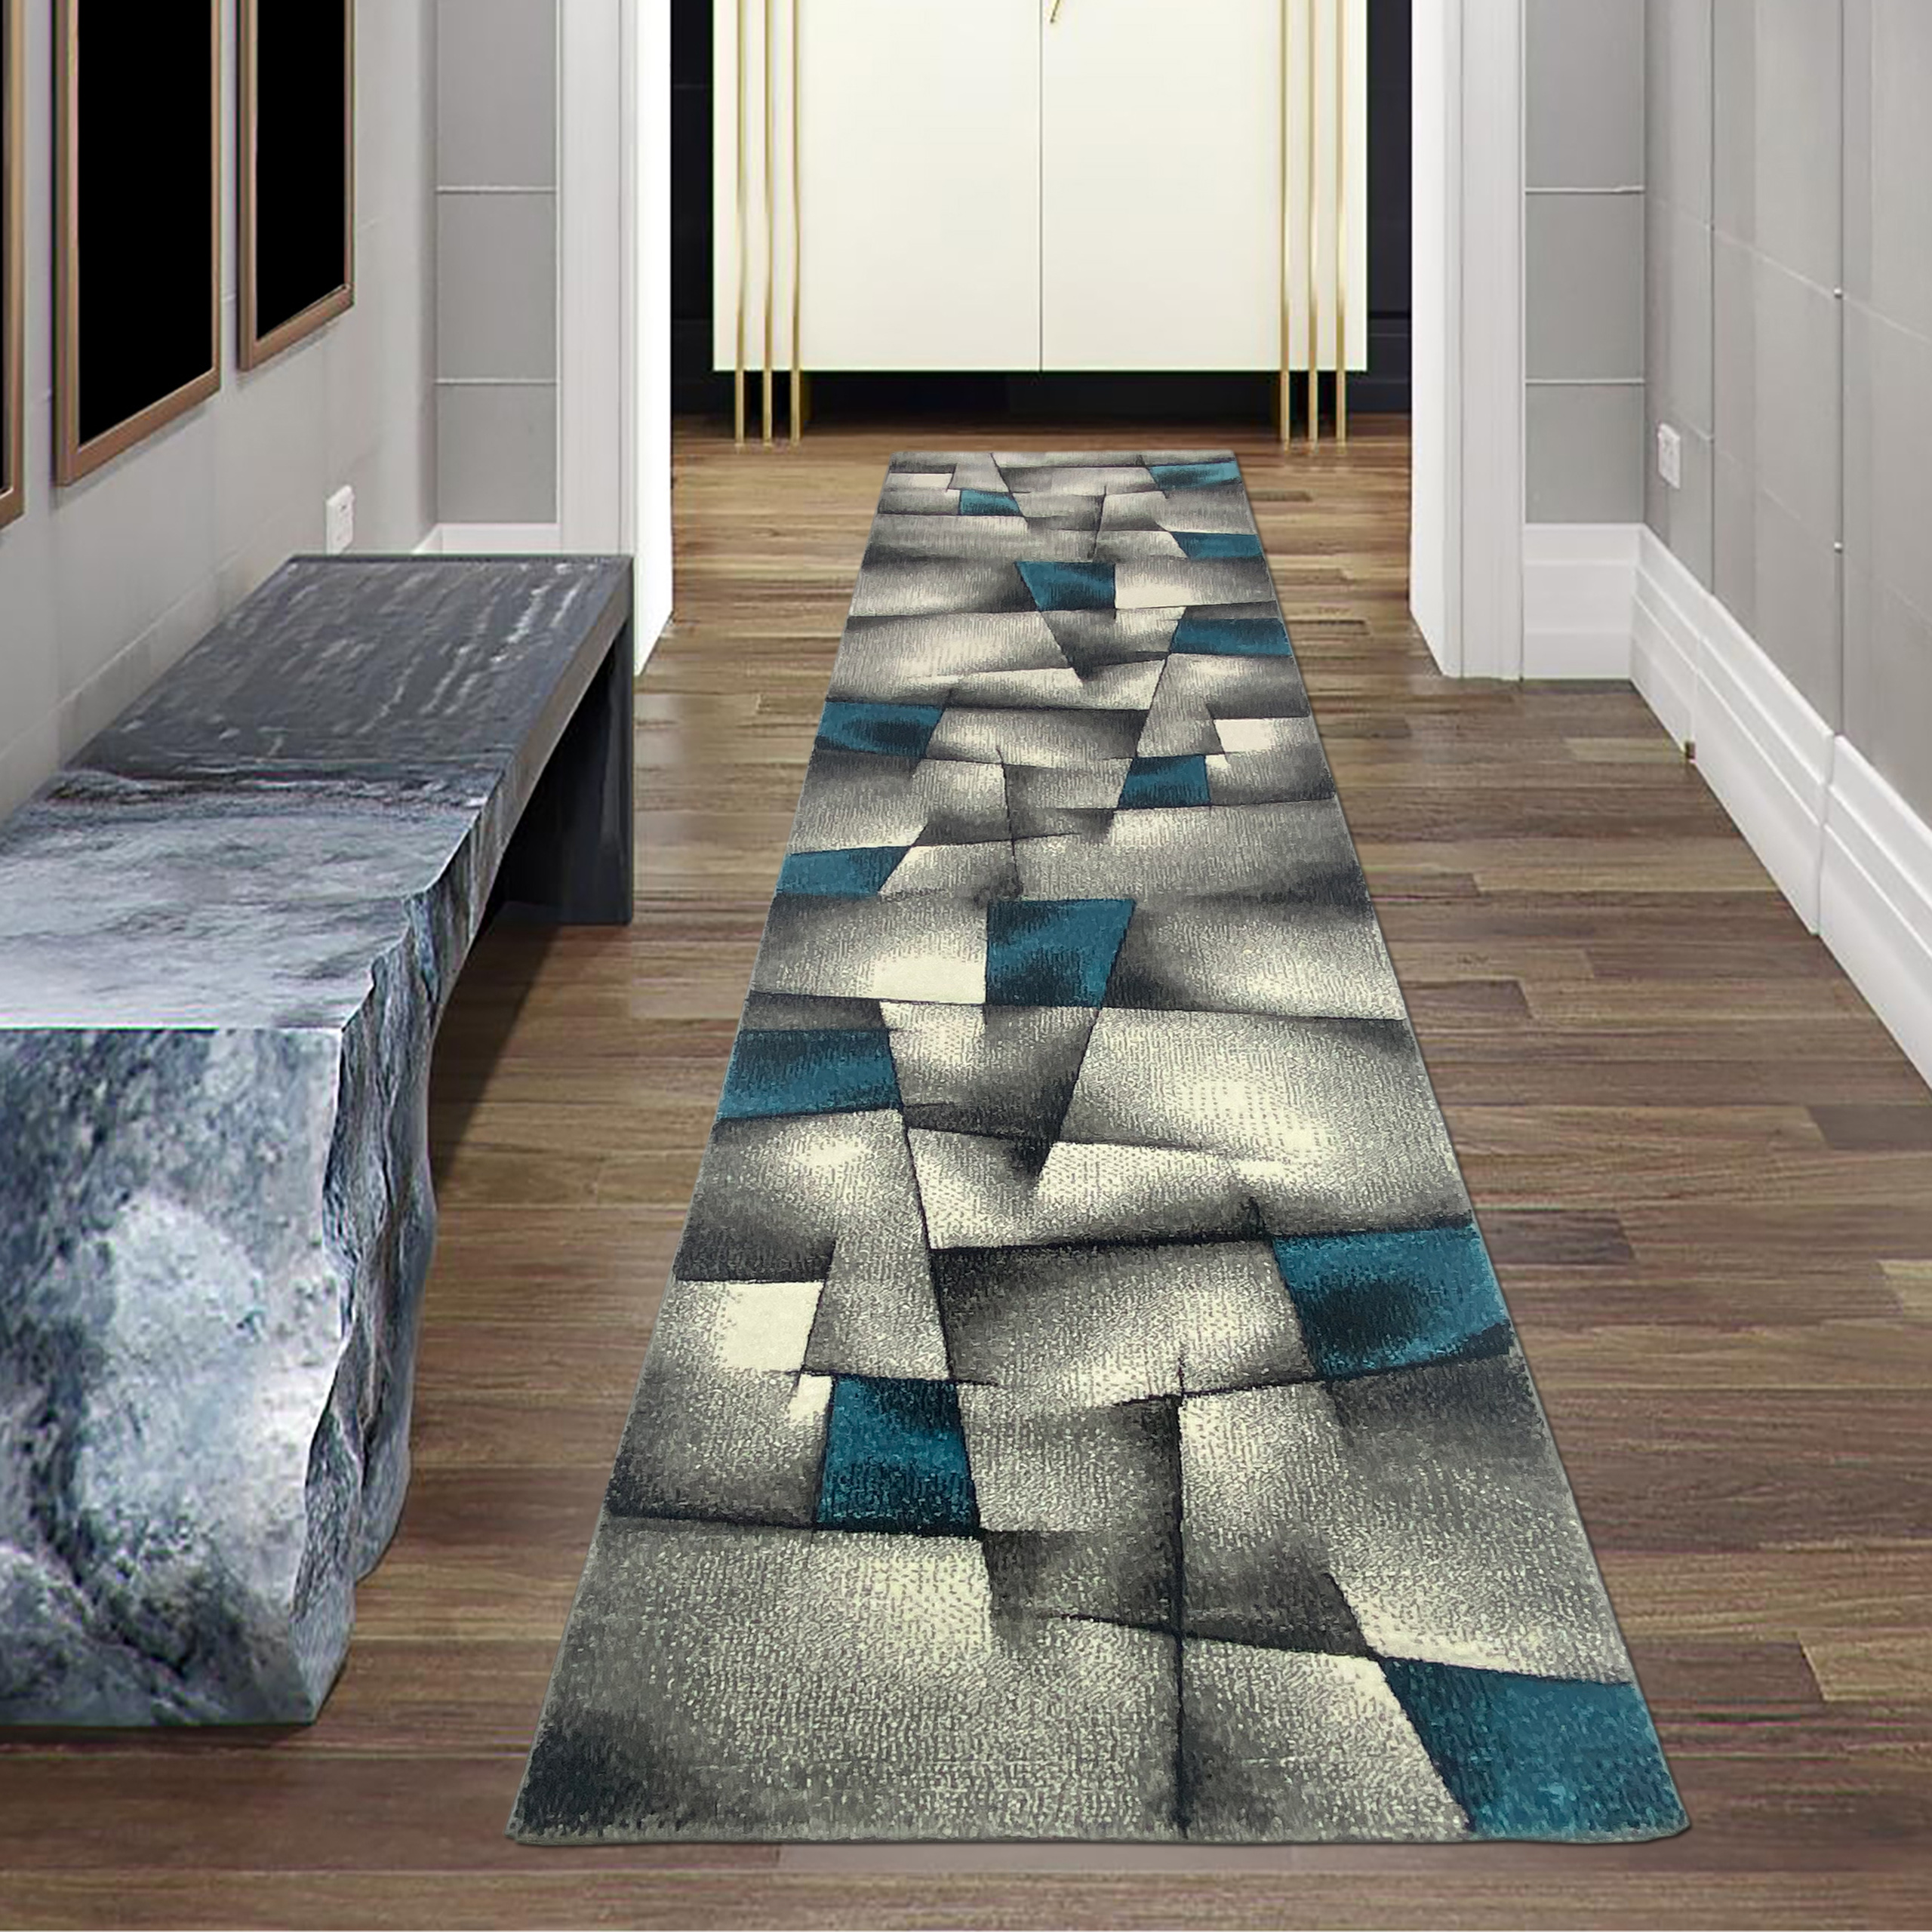 and - High-quality cheap at designer -Traum Modern & dreams carpet Teppich carpets: